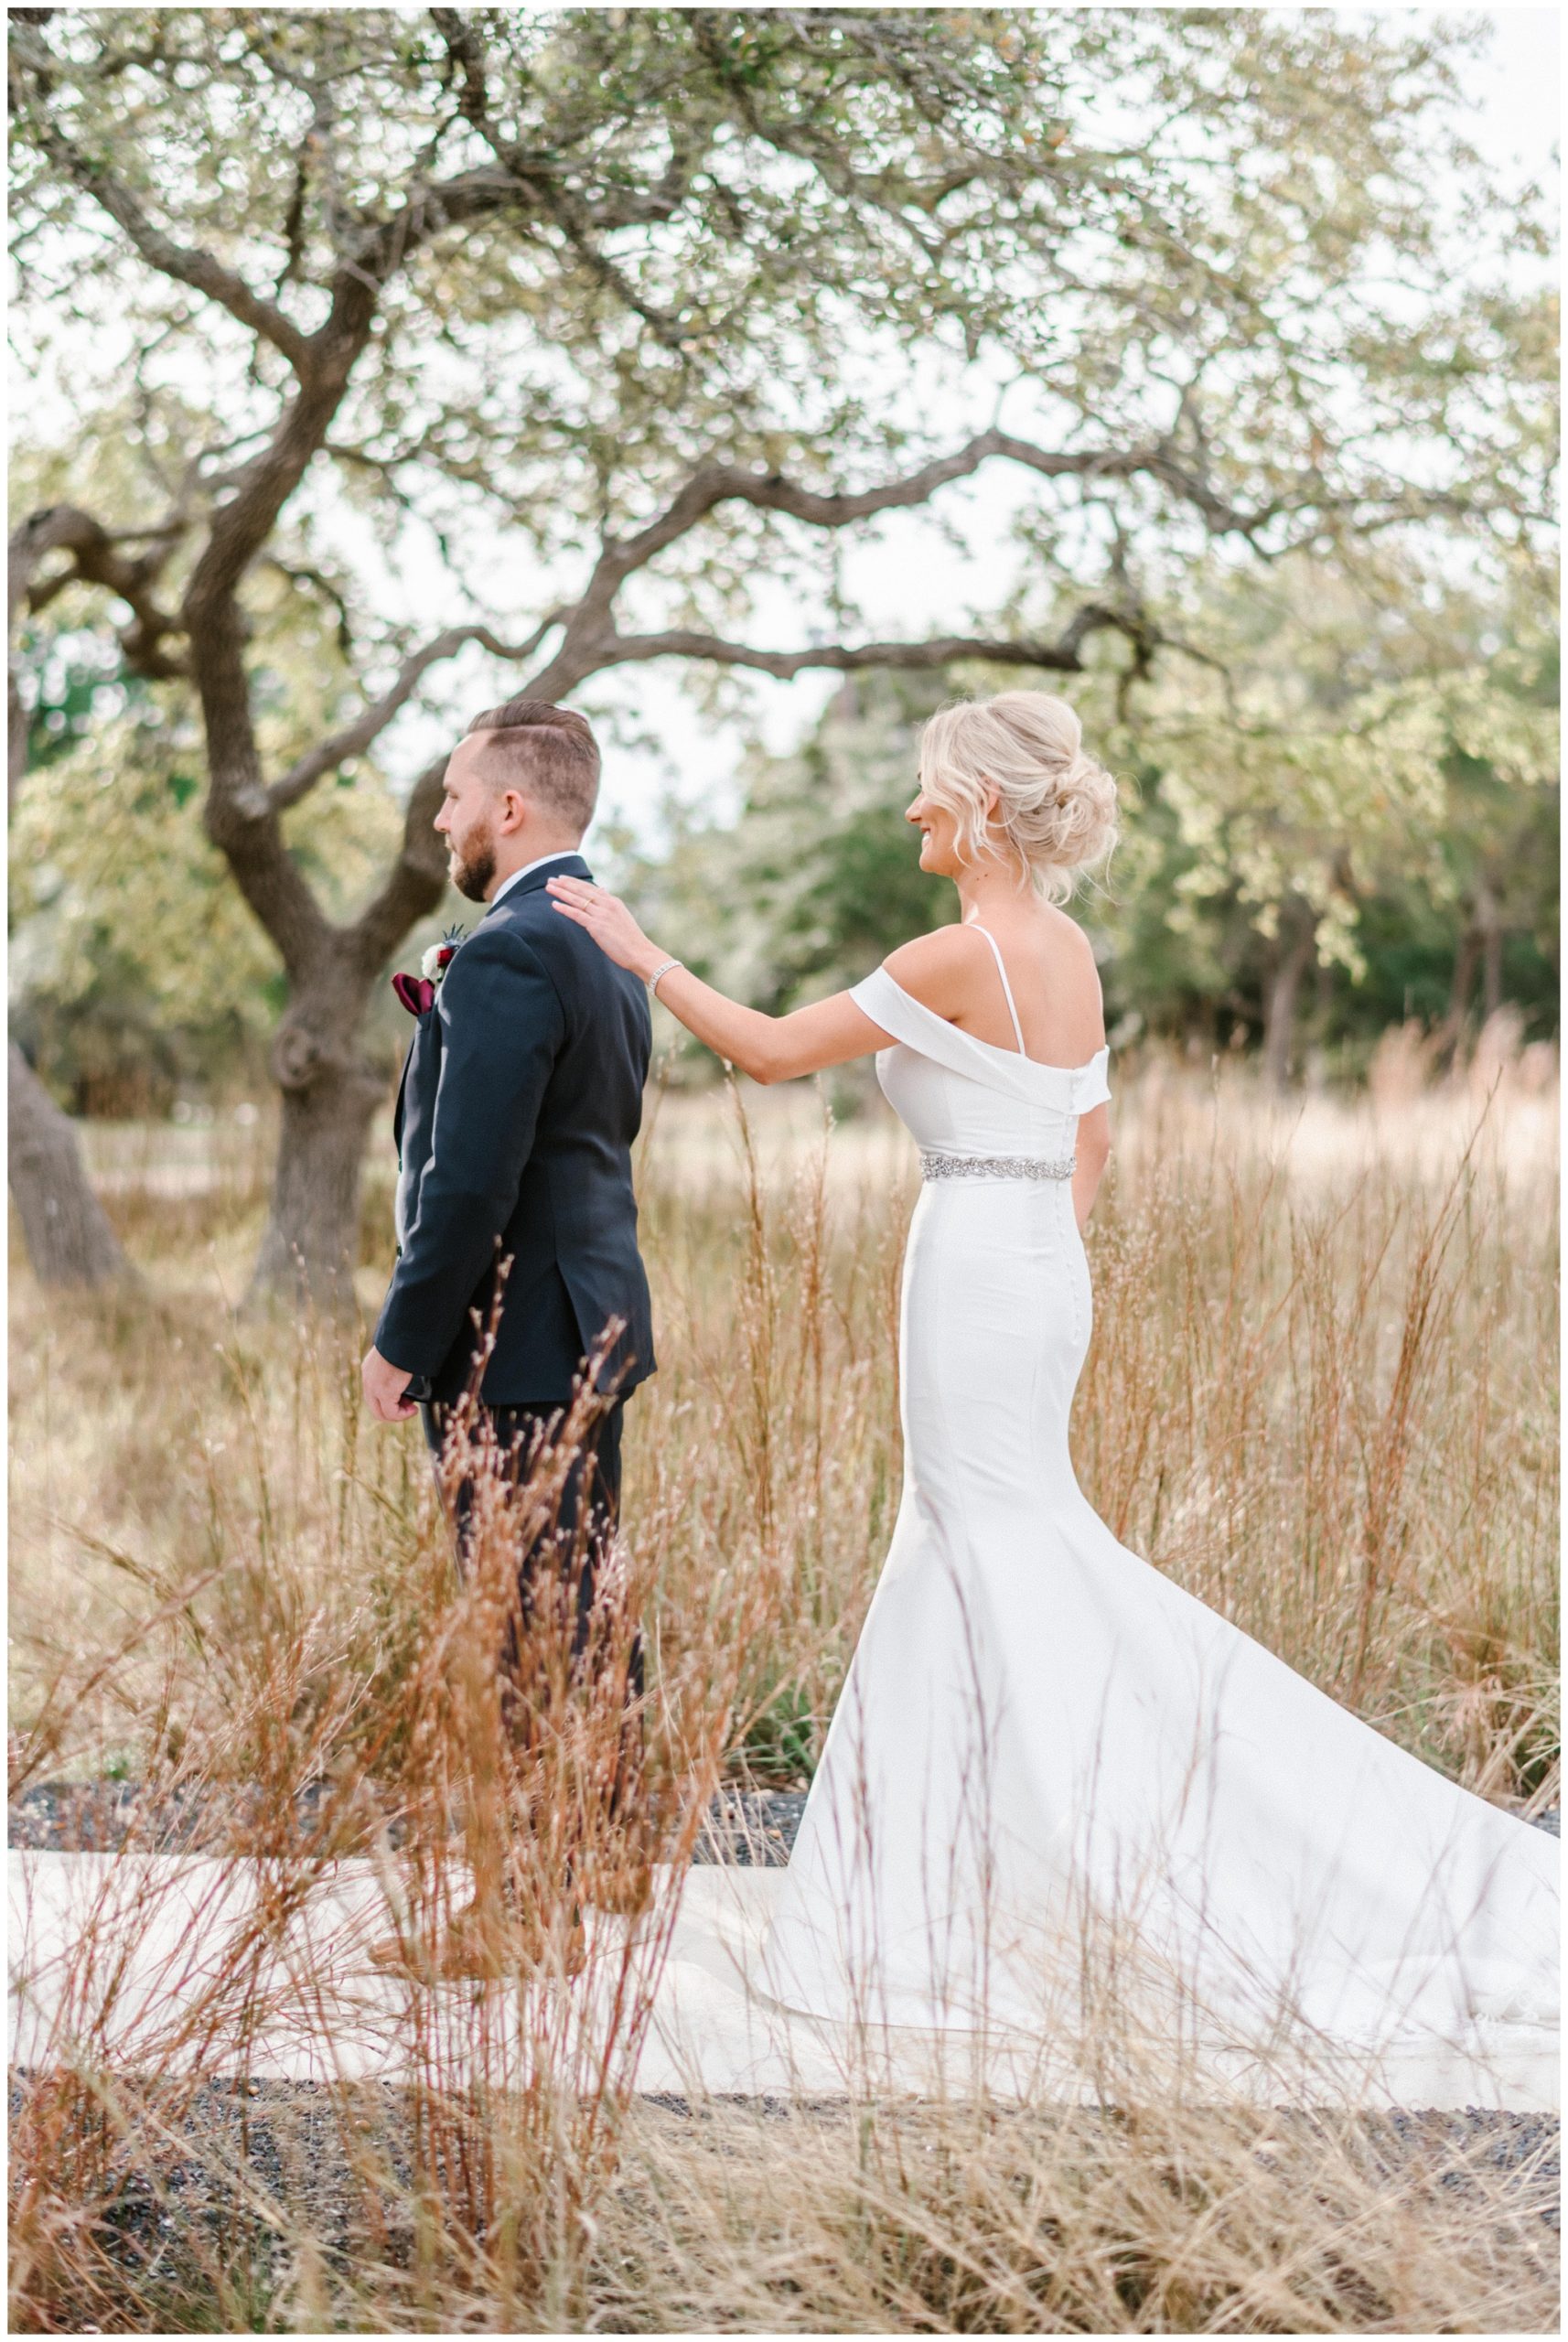 First look photo inspiration, Cedars Ranch Austin TX Venue, Joslyn Holtfort Austin Wedding Photographer